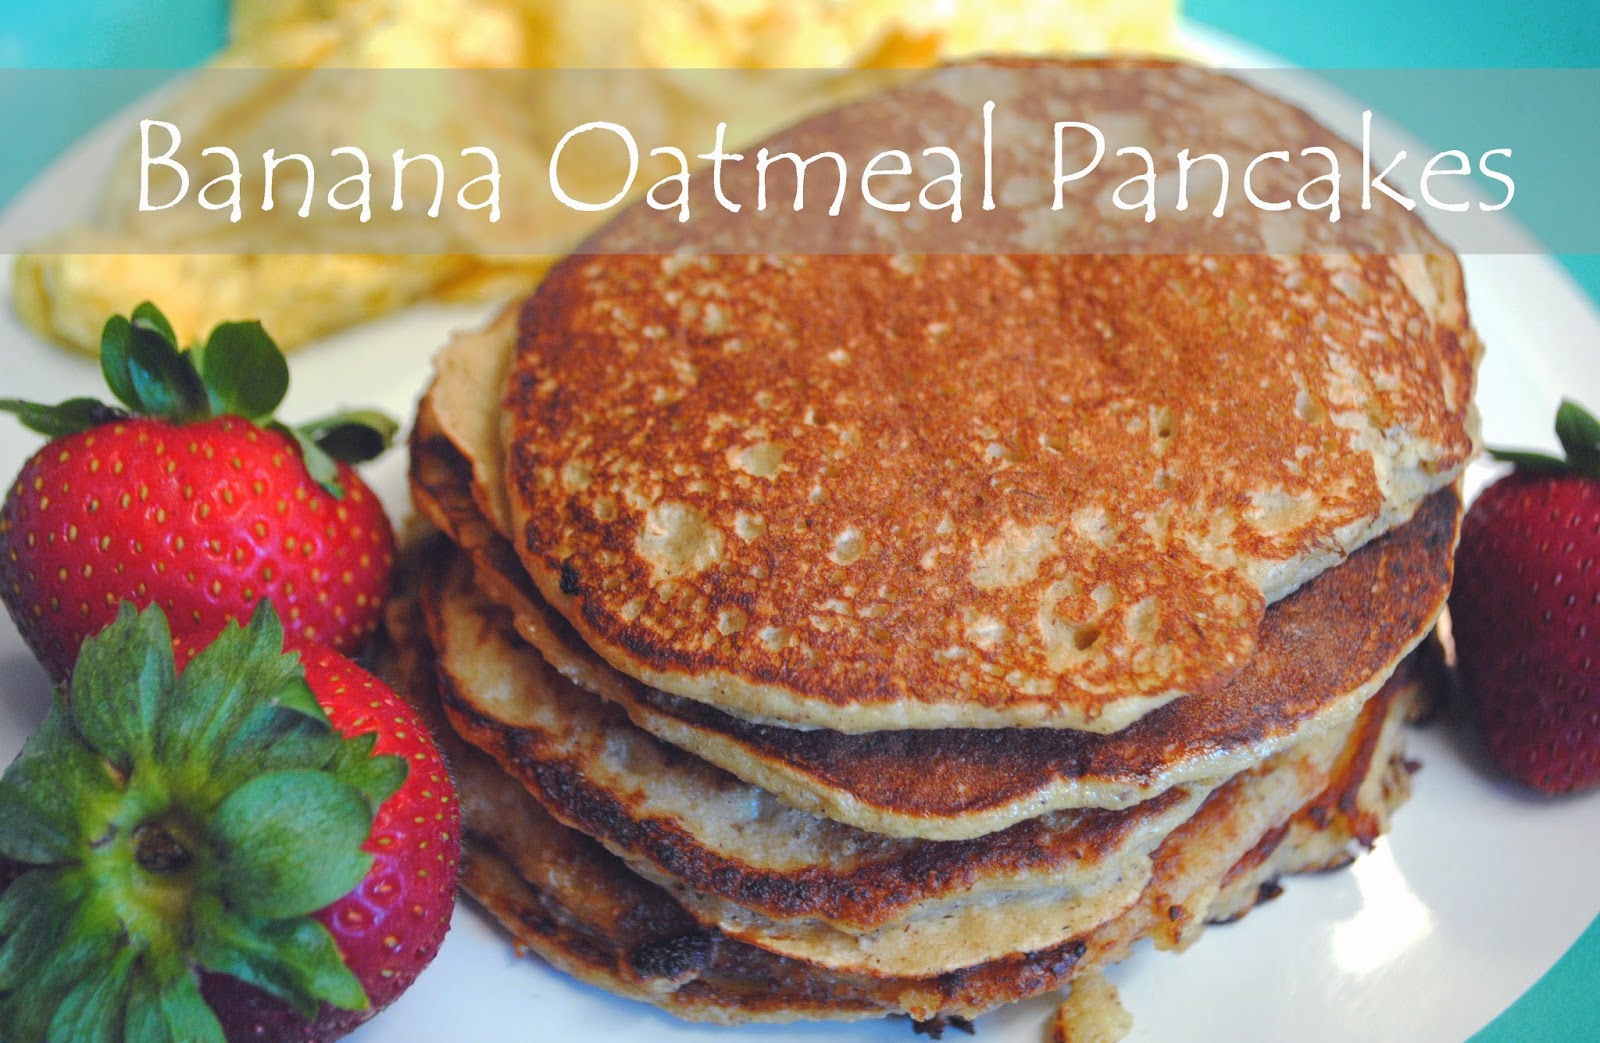 For My Love of Food: Banana Oatmeal Pancakes